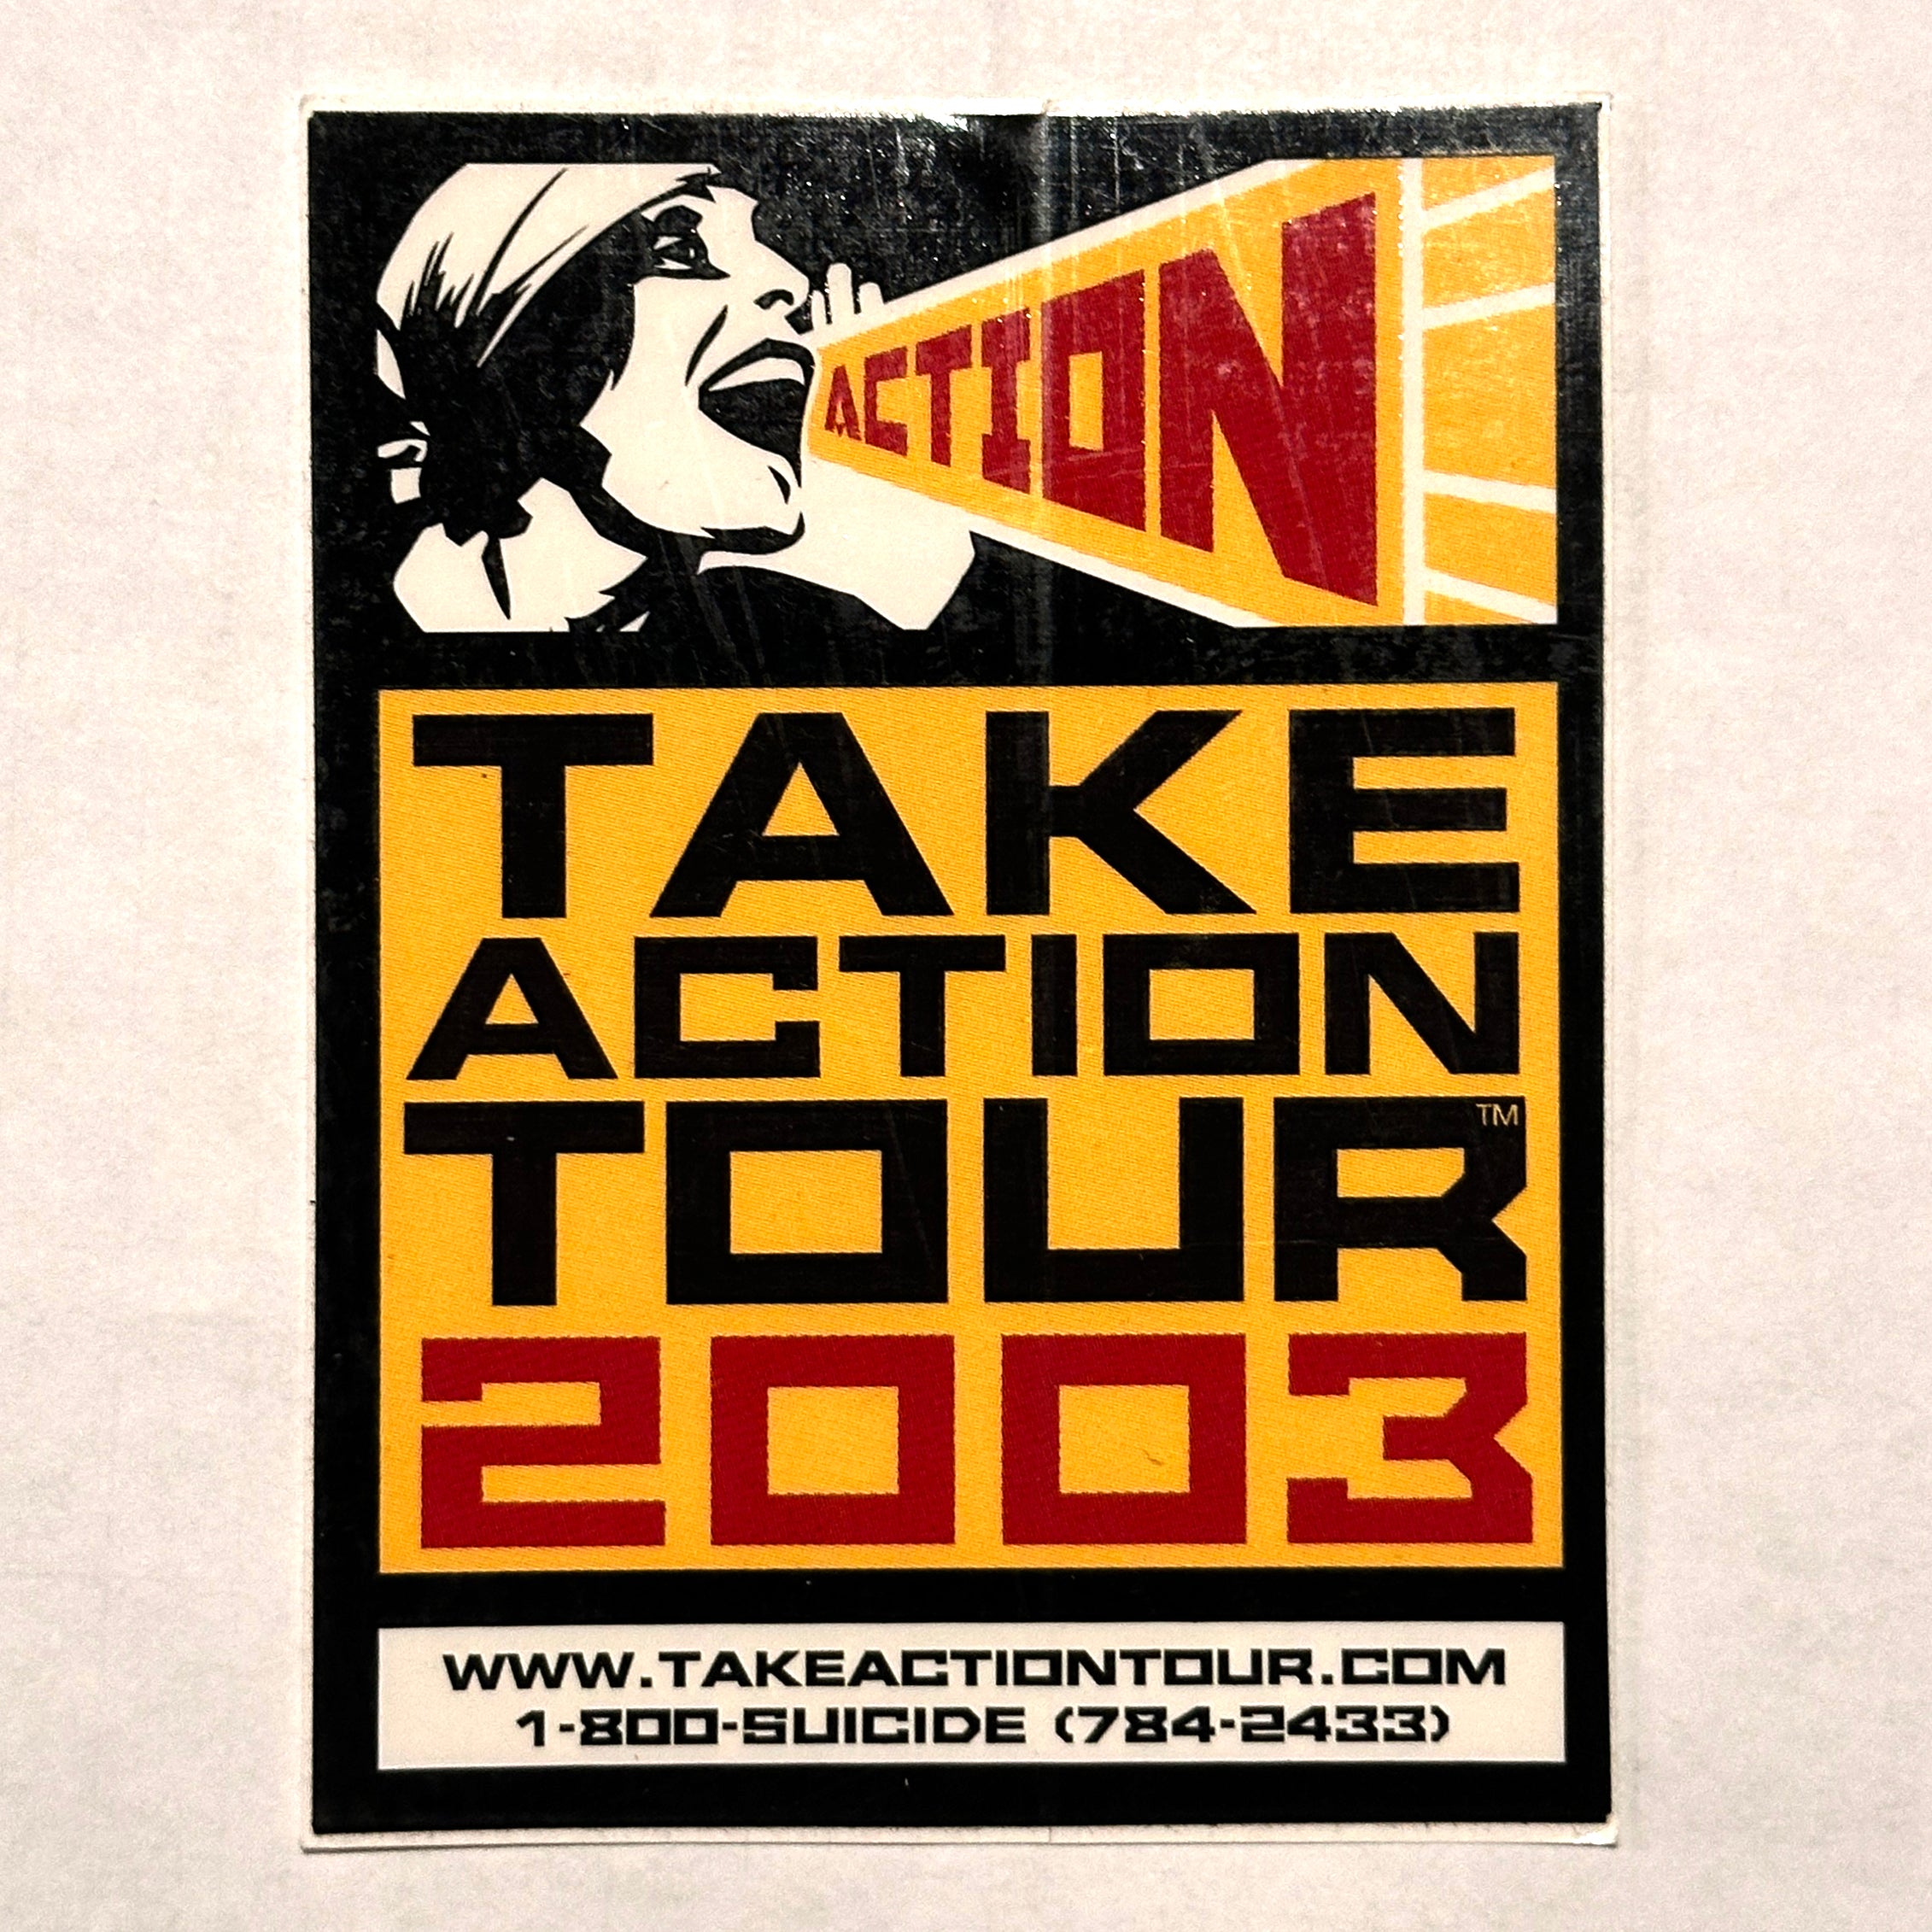 Sub City Records – Take ActionTour 2003 Promo Sticker